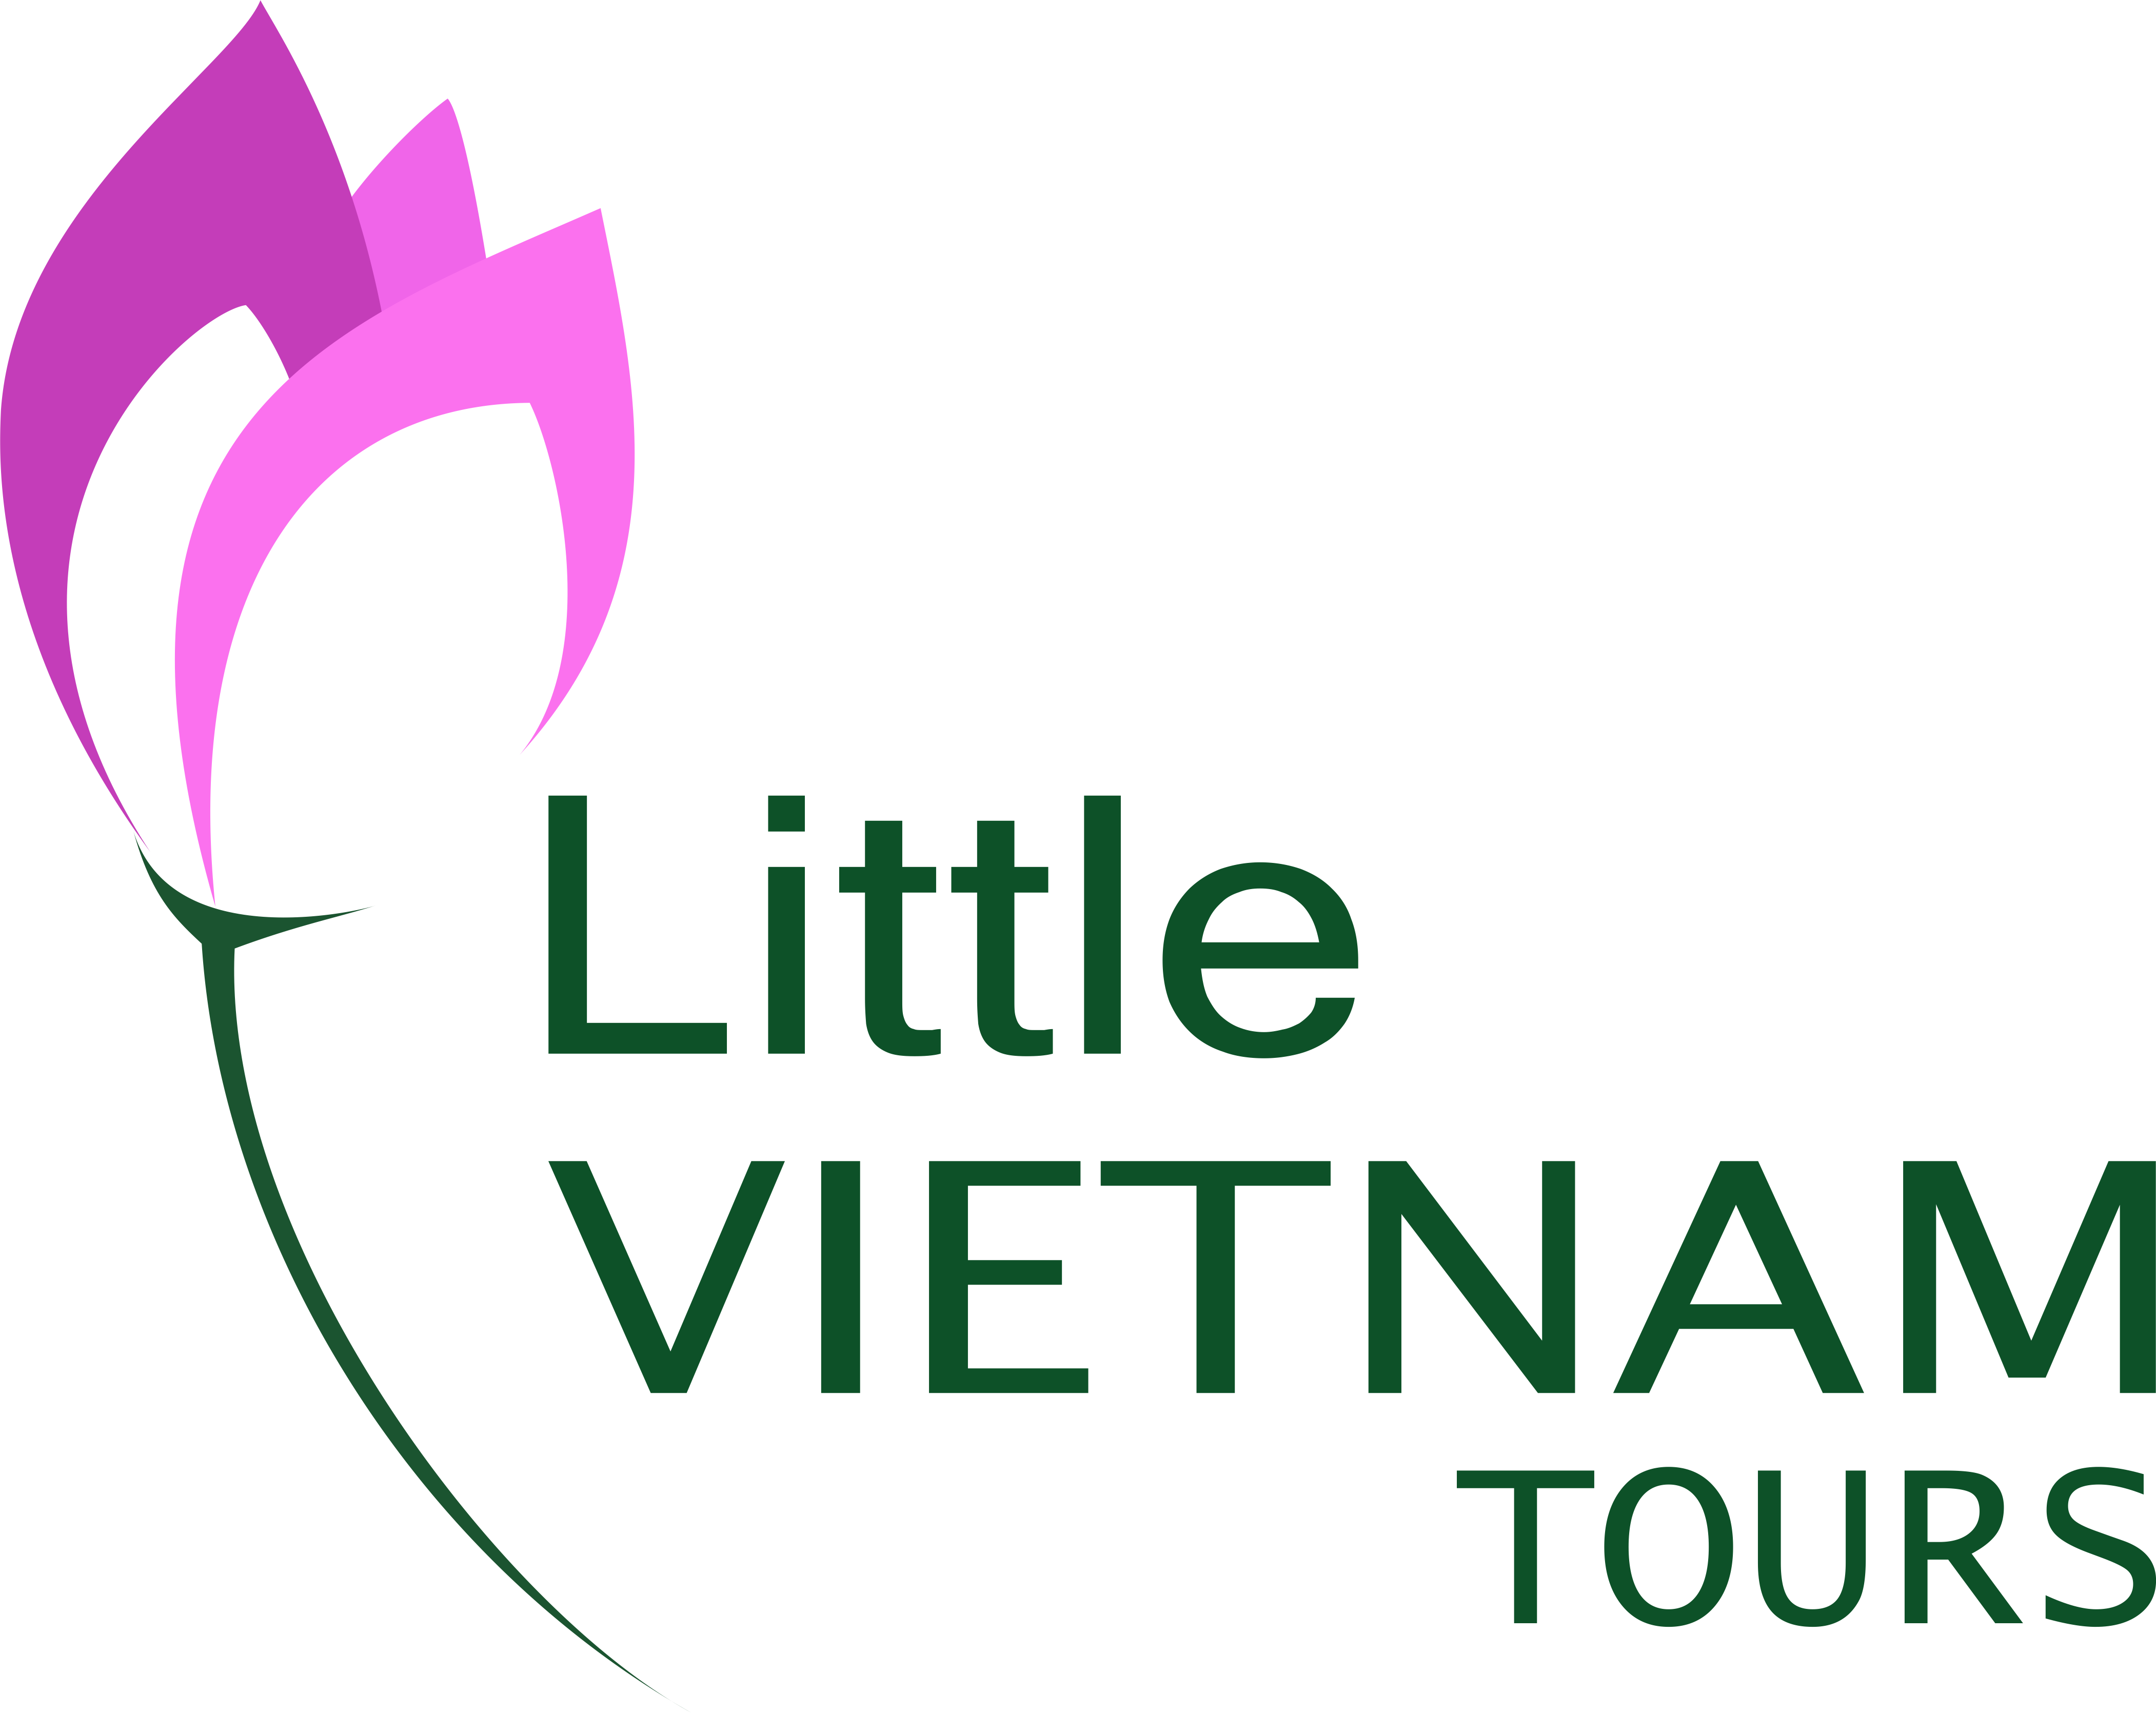 Little Vietnam Tours logo